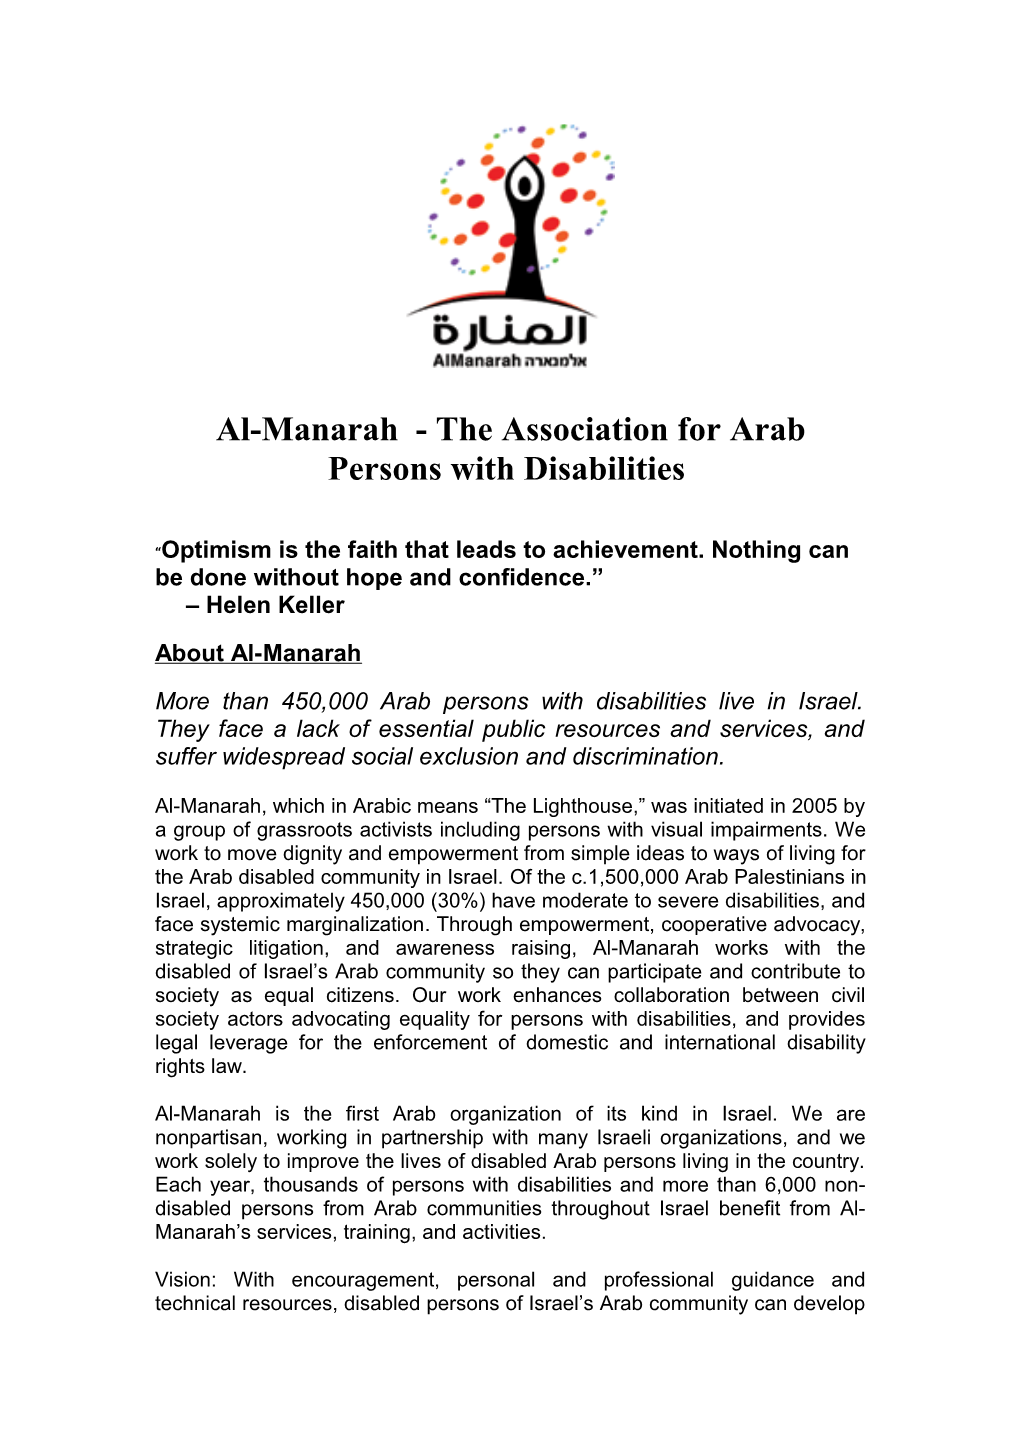 About Al-Manarah